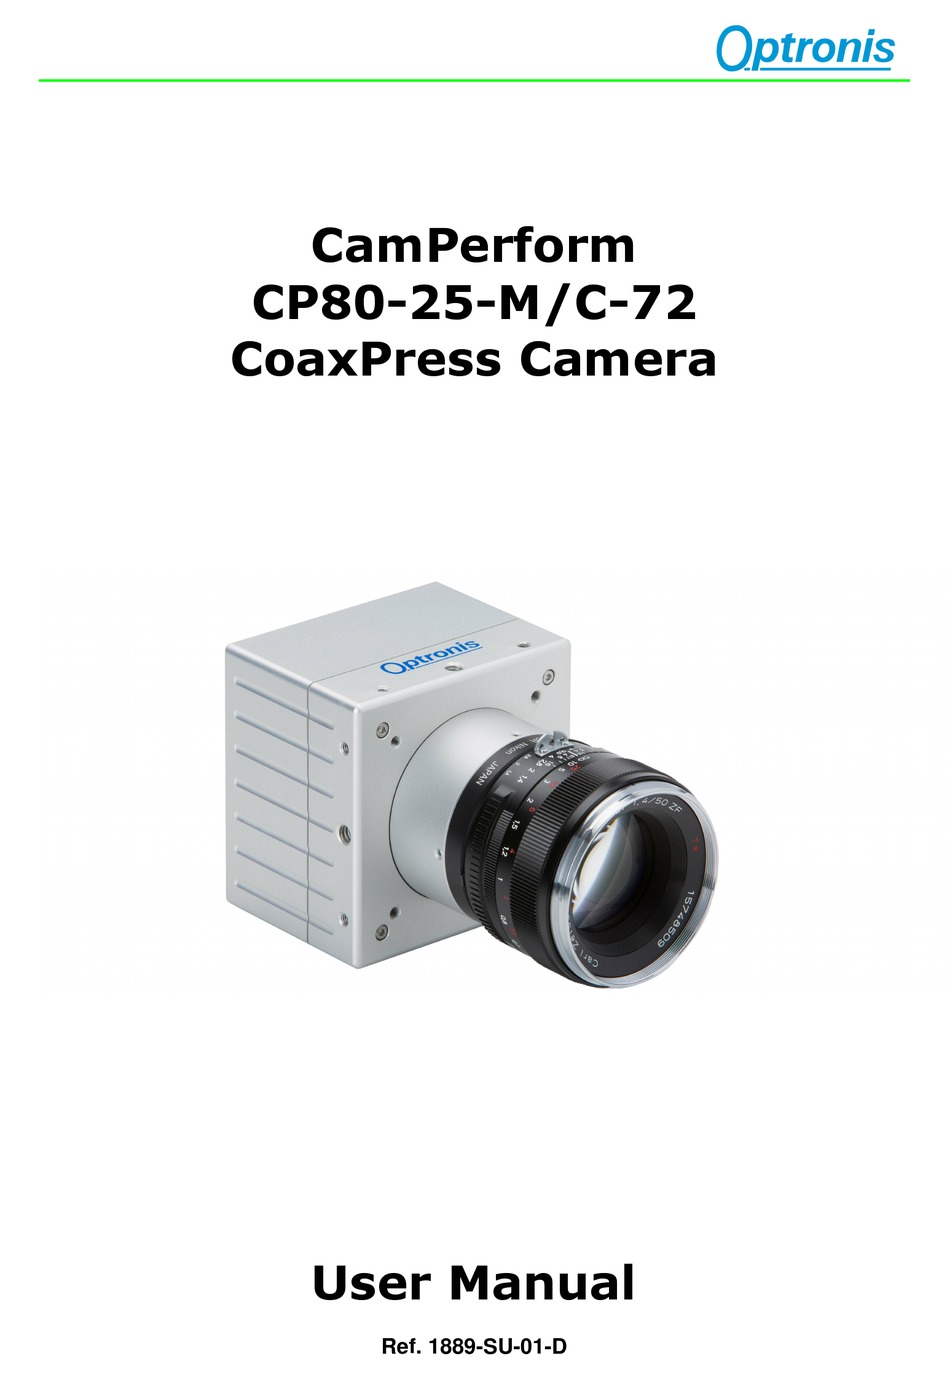 CamPerform CP80-25-M